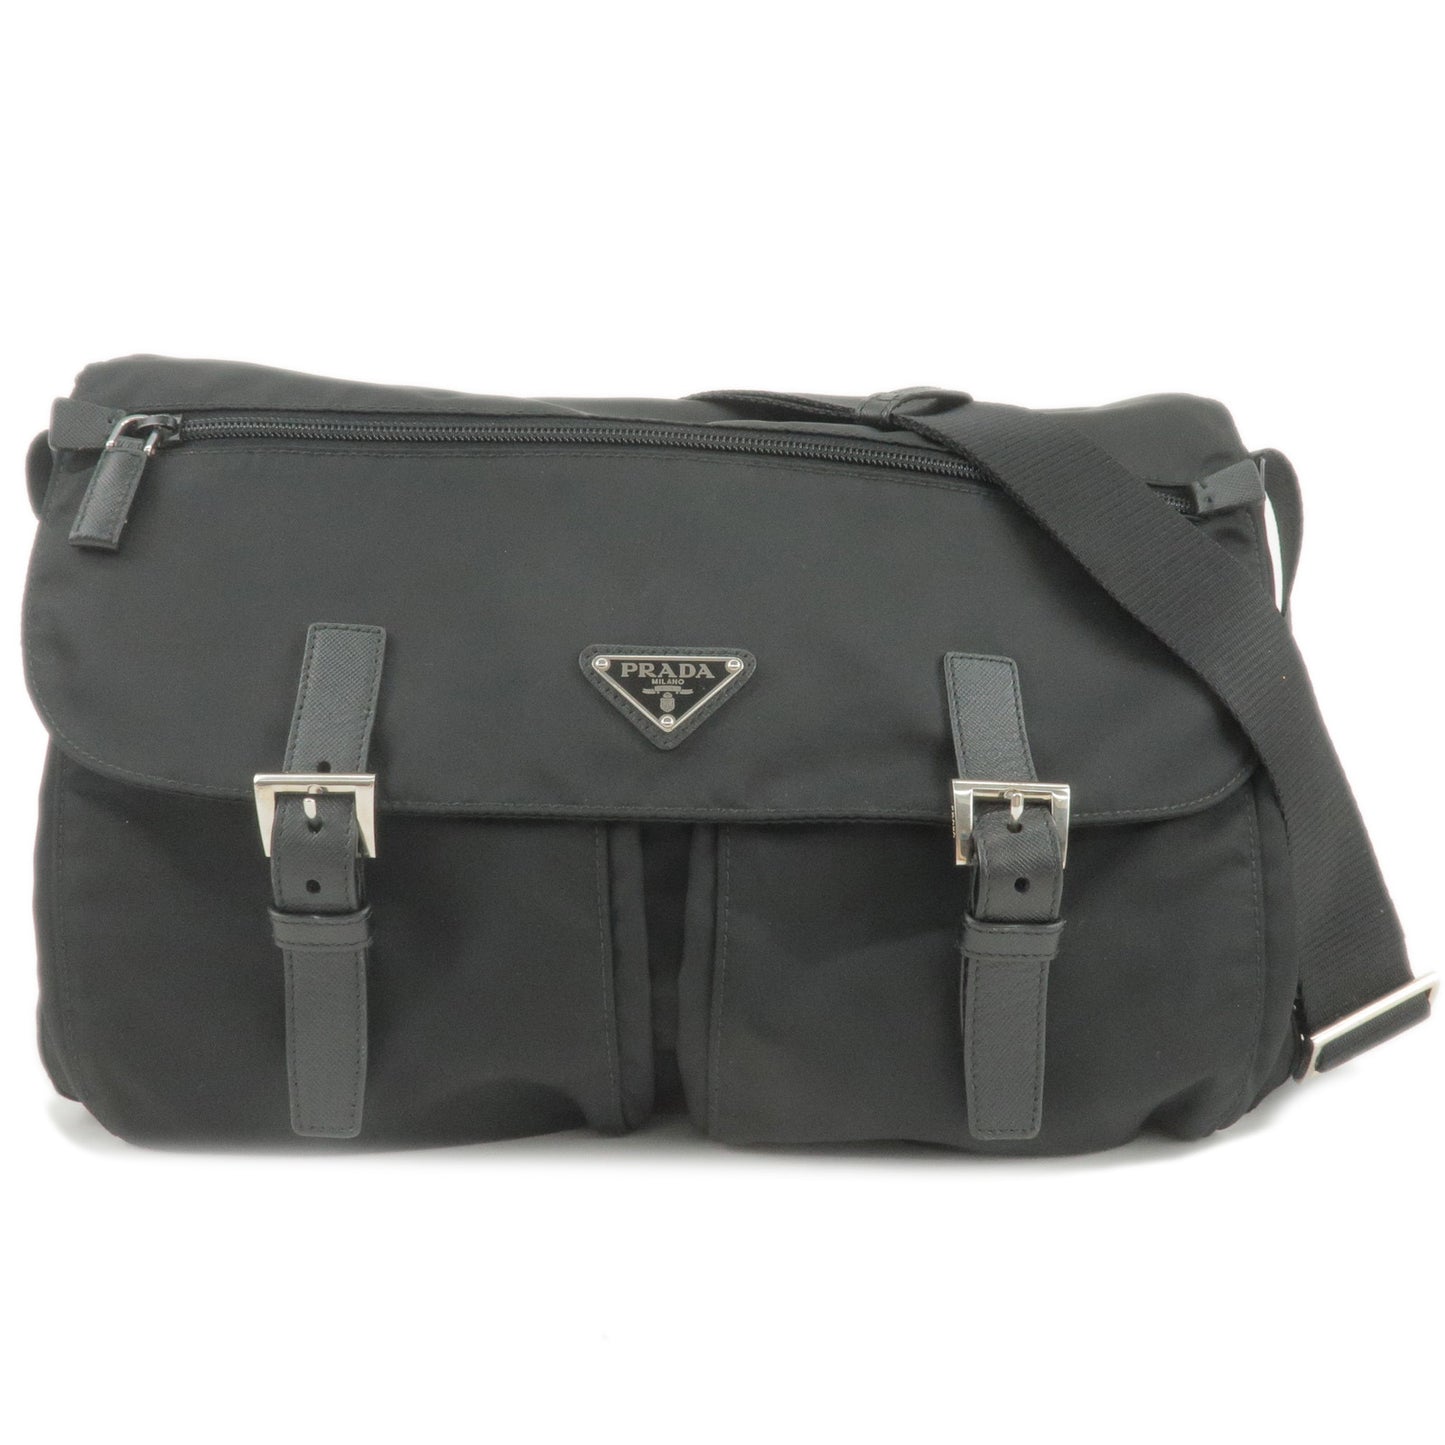 PRADA-Logo-Nylon-Leather-Shoulder-Bag-Crossbody-Bag-Black-BT1738